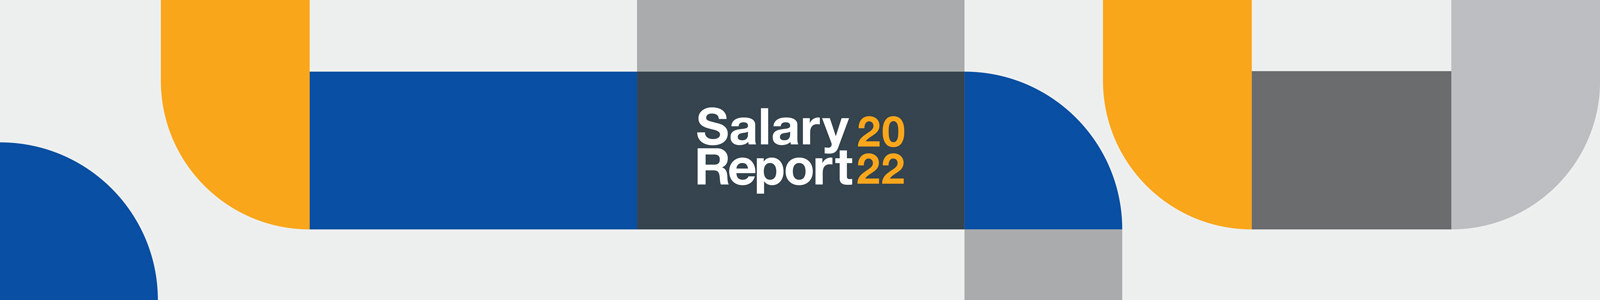 Salary Report 2022